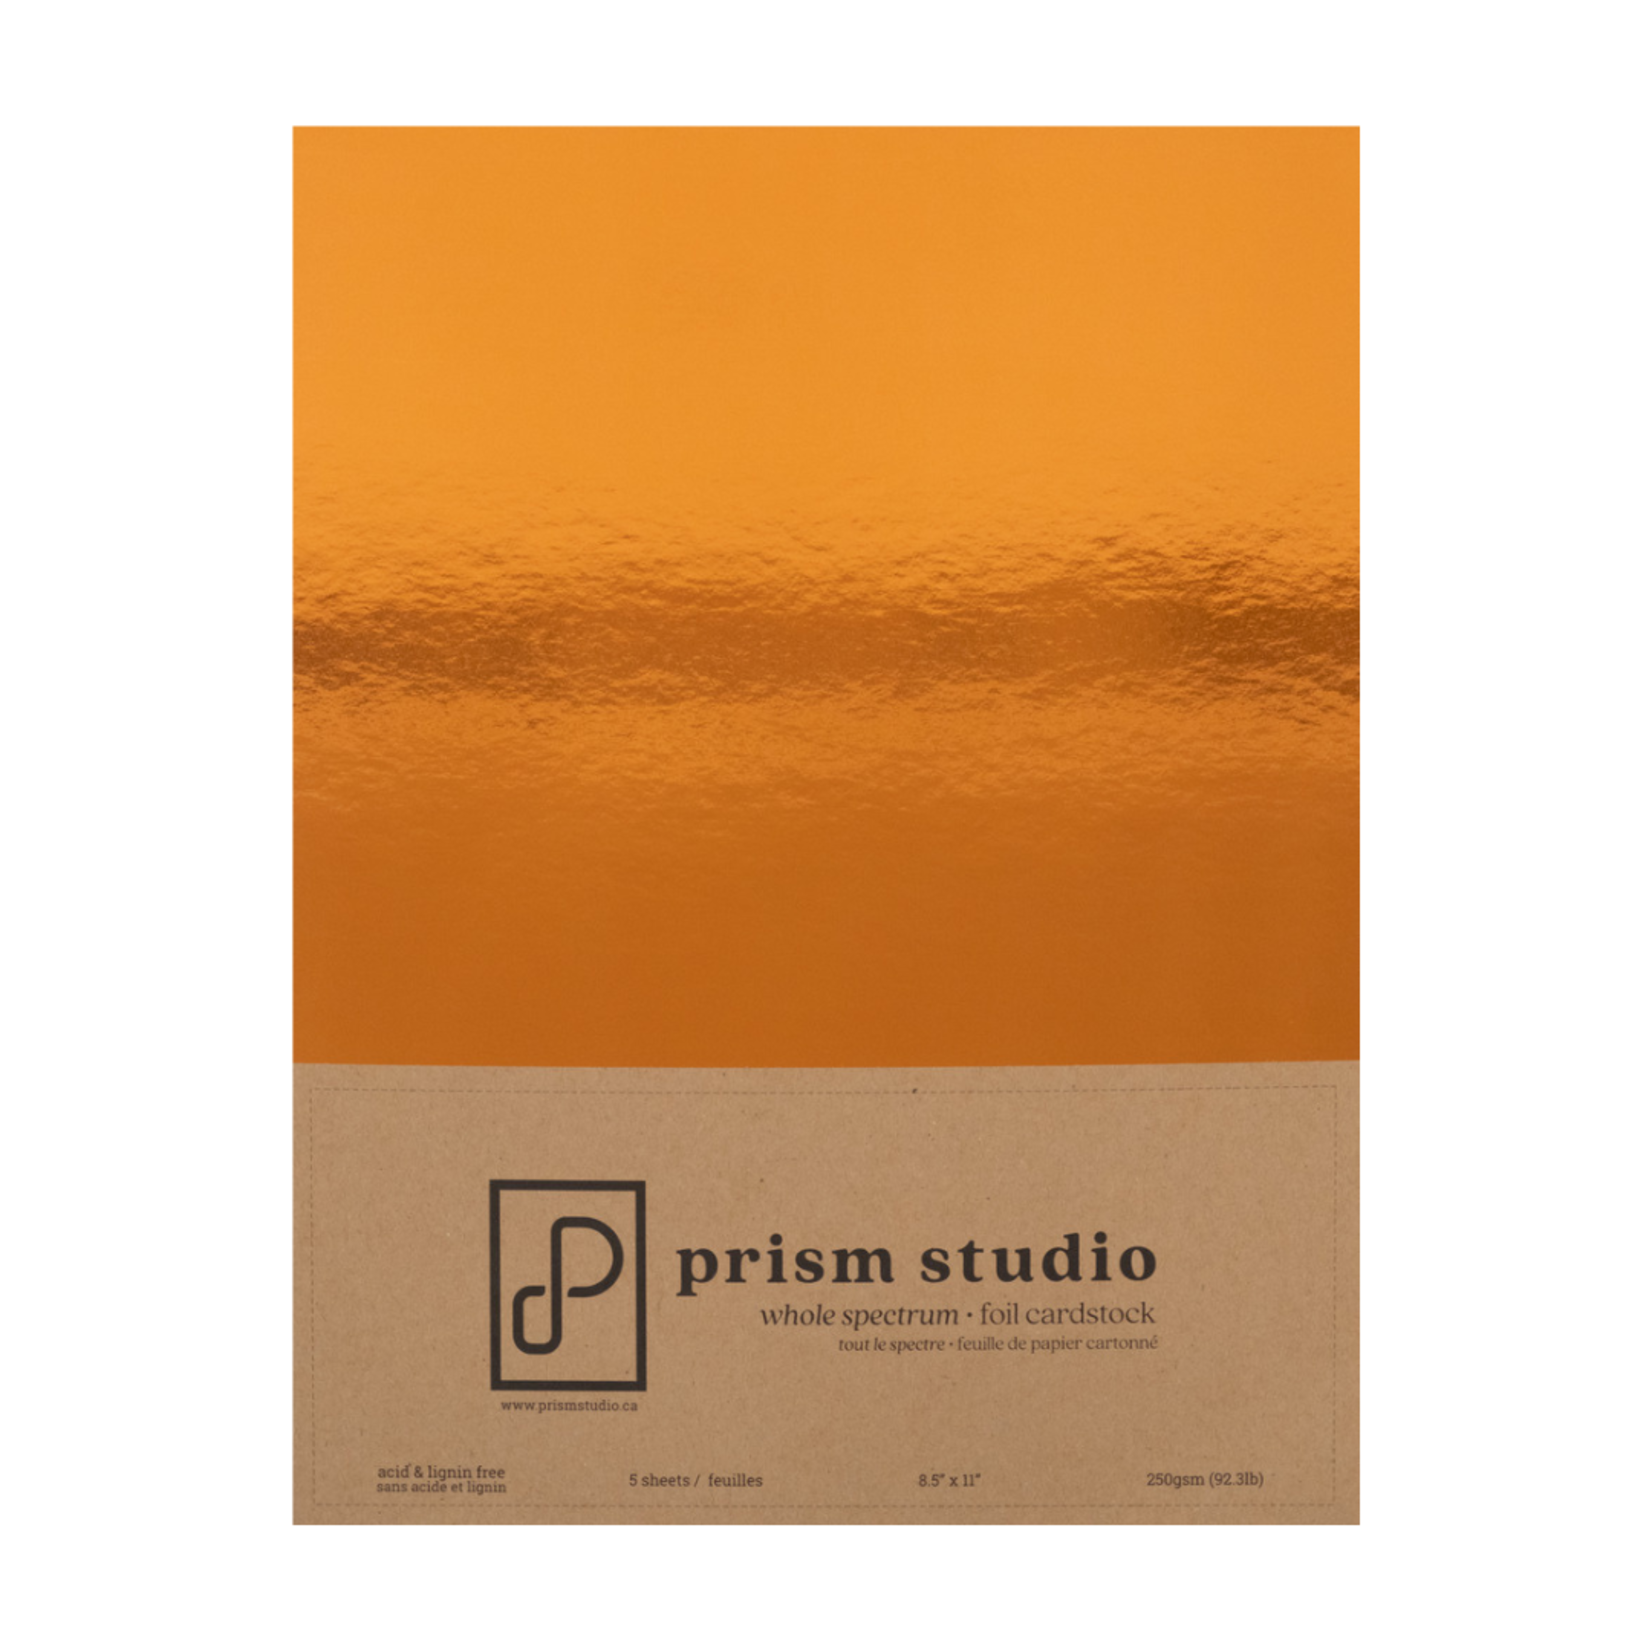 PRISM STUDIO PRISM STUDIO WHOLE SPECTRUM FOIL CARDSTOCK 8.5X11 COPPER